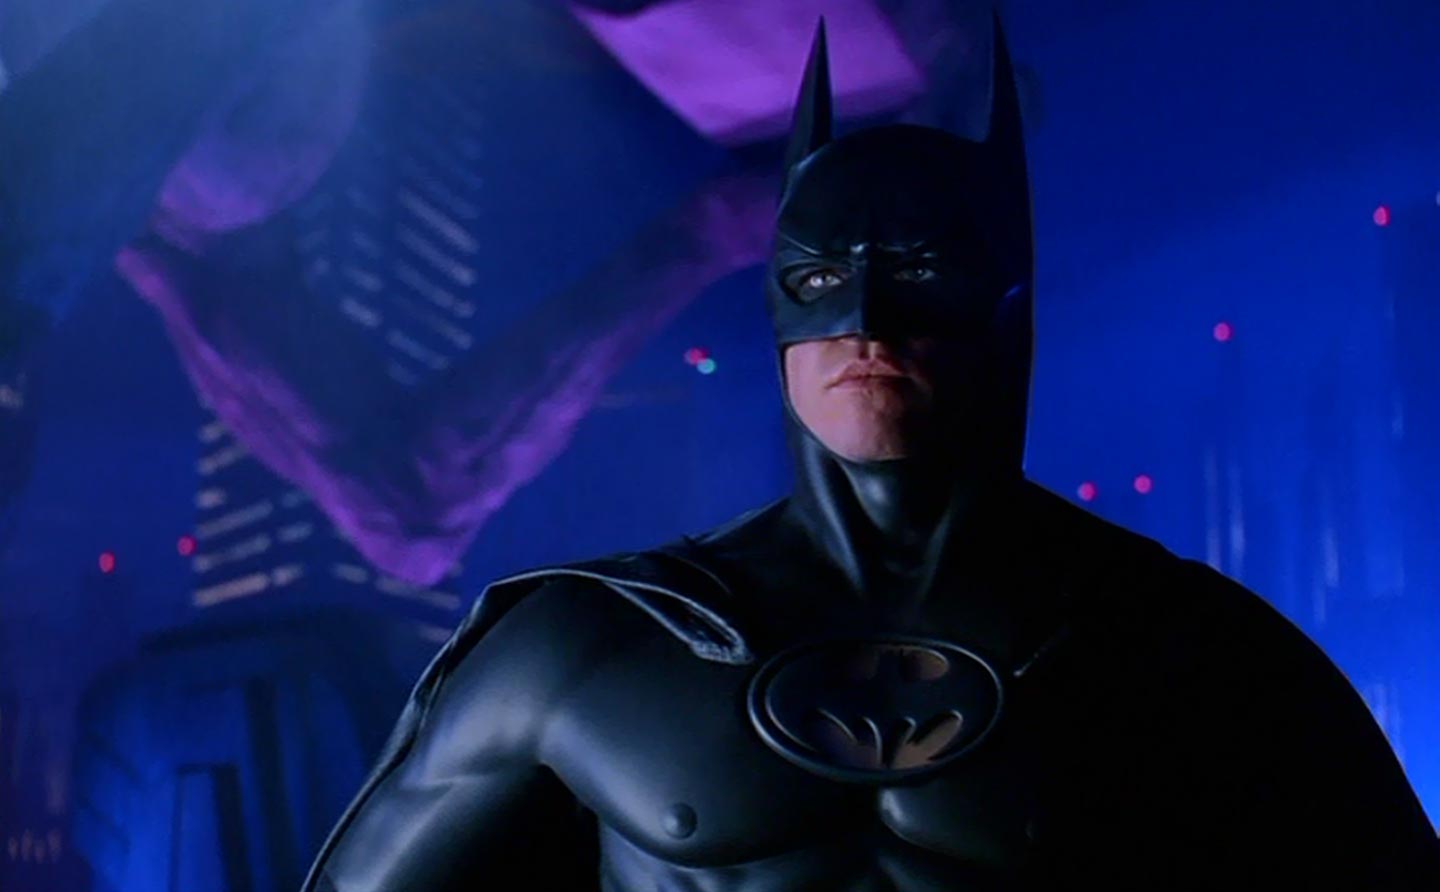 Joel Schumacher's 'Batman Forever' Turns 20 This Year